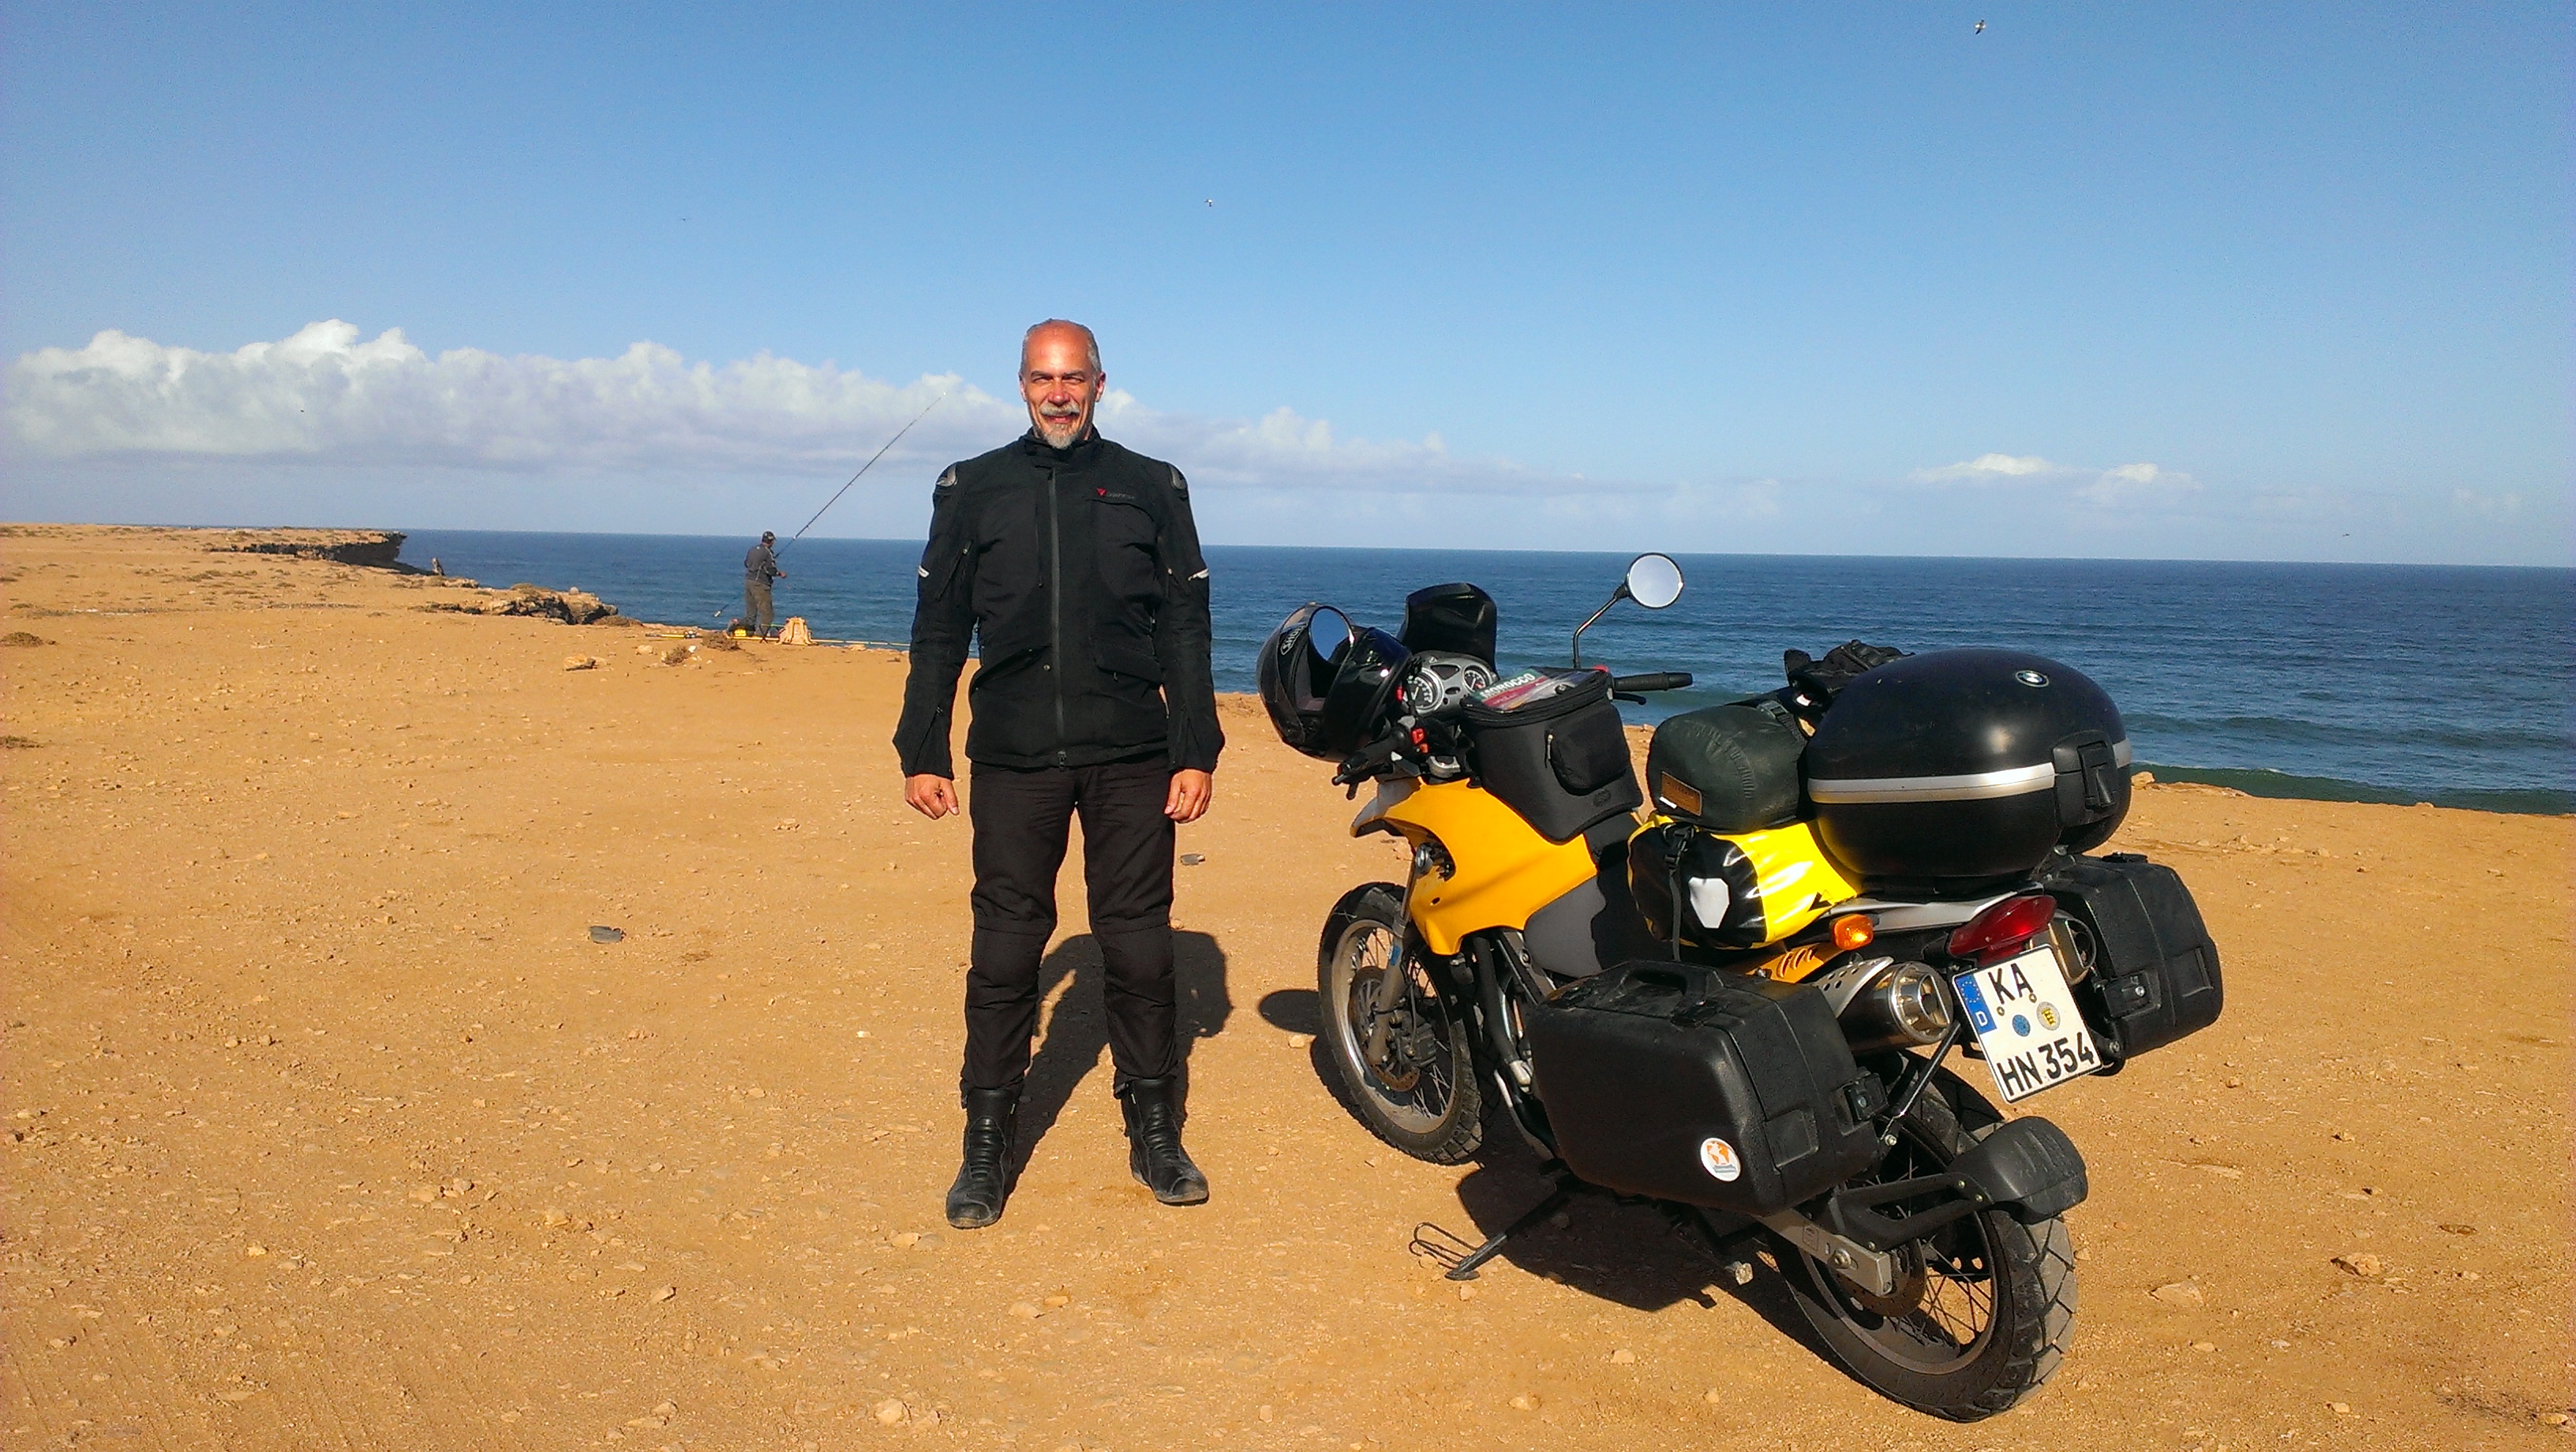 In West Sahara, somewhere South of Tan-Tan.